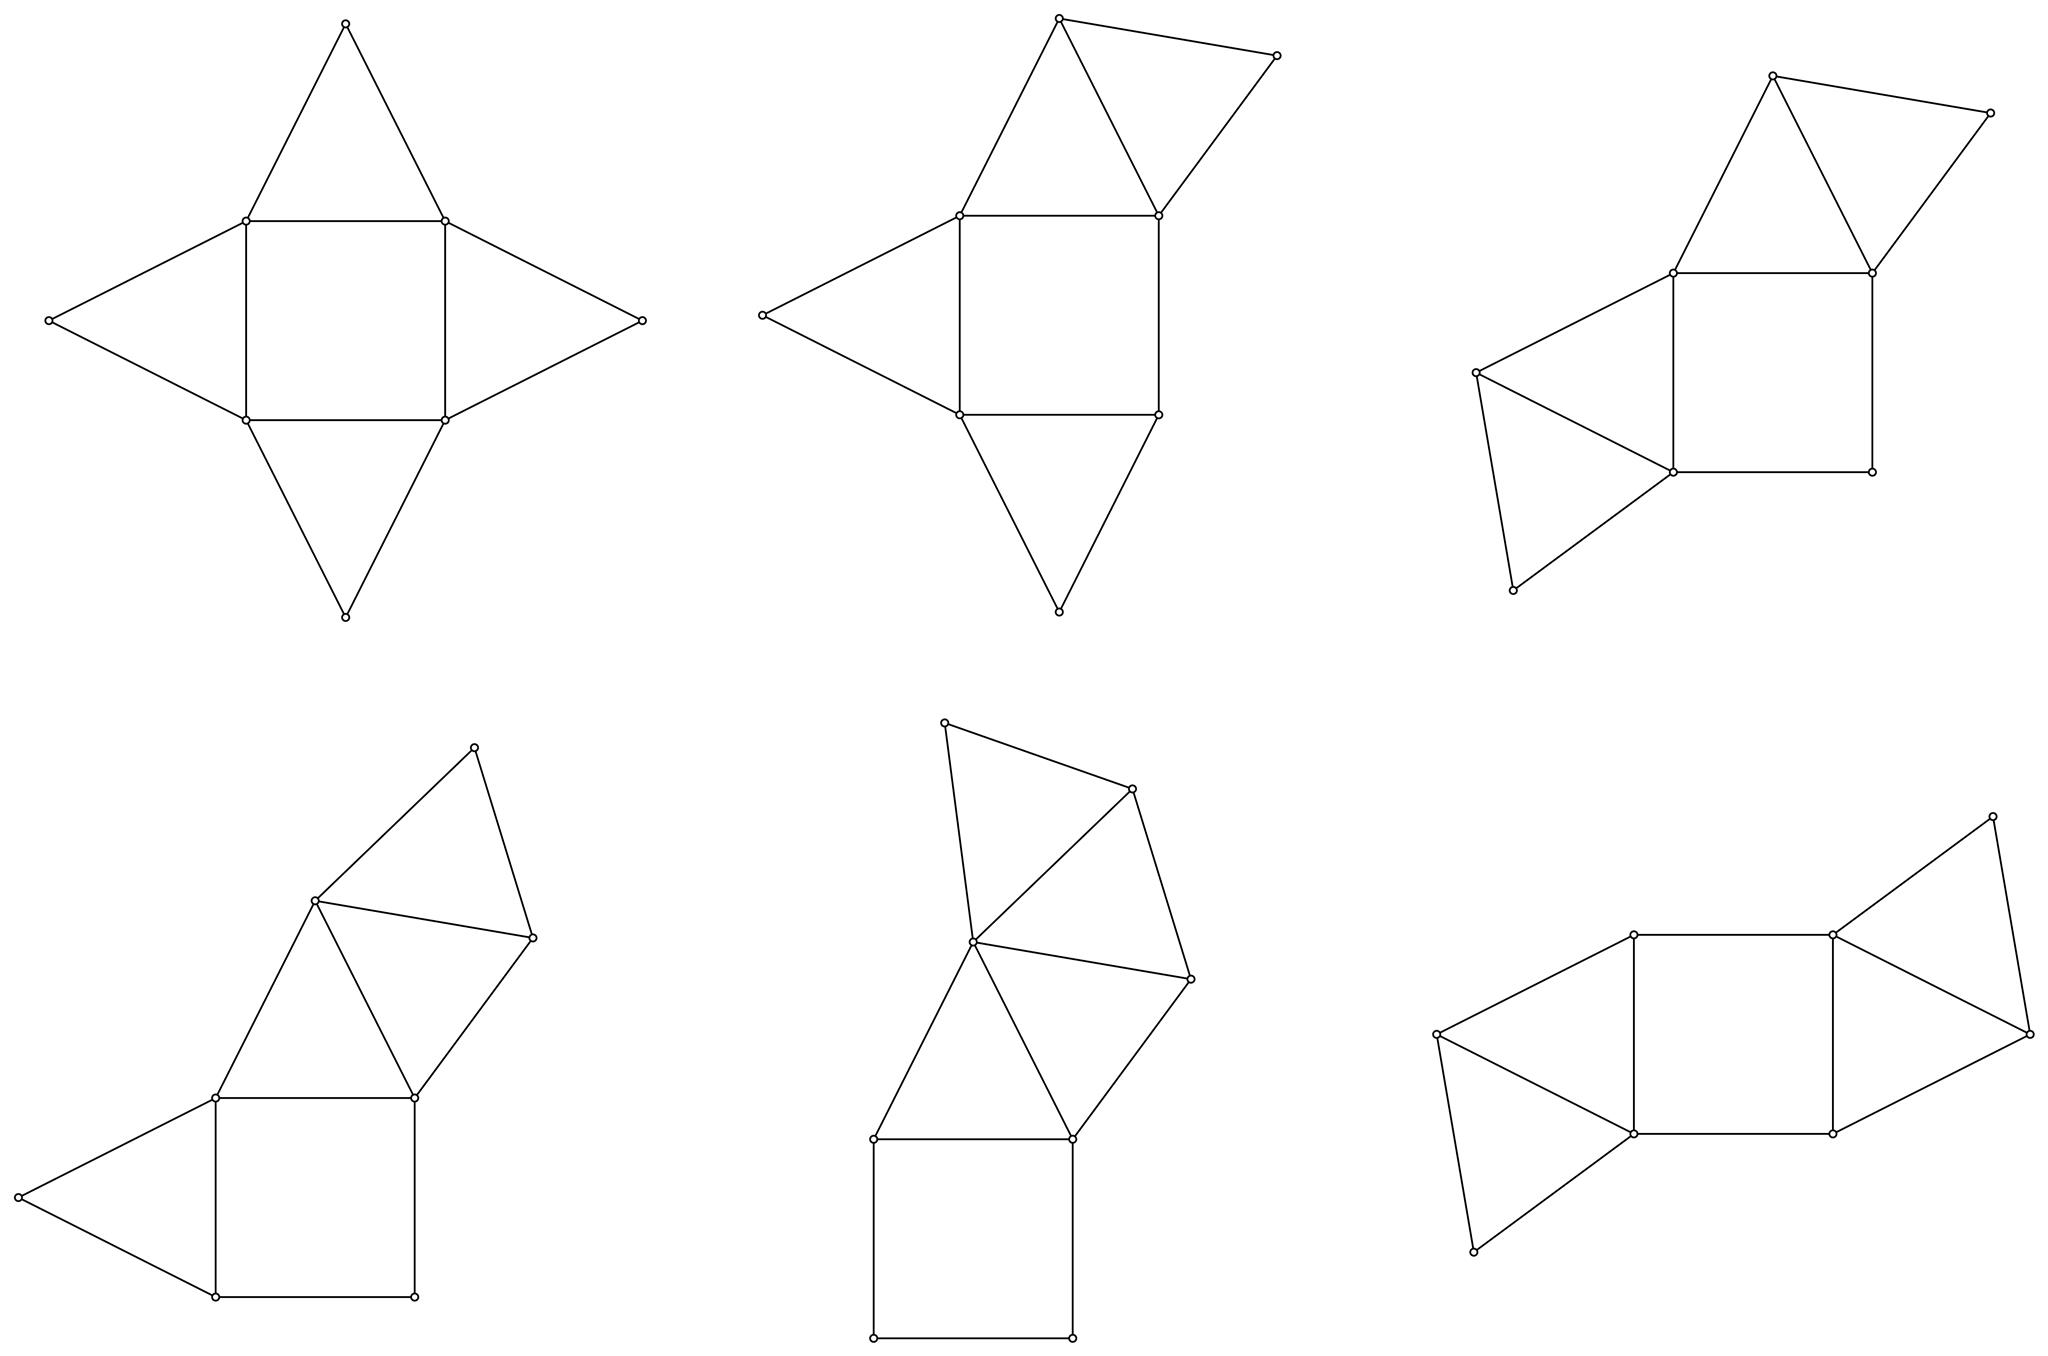 Slika prikazuje razne mreze pravilne četverostrane piramide.